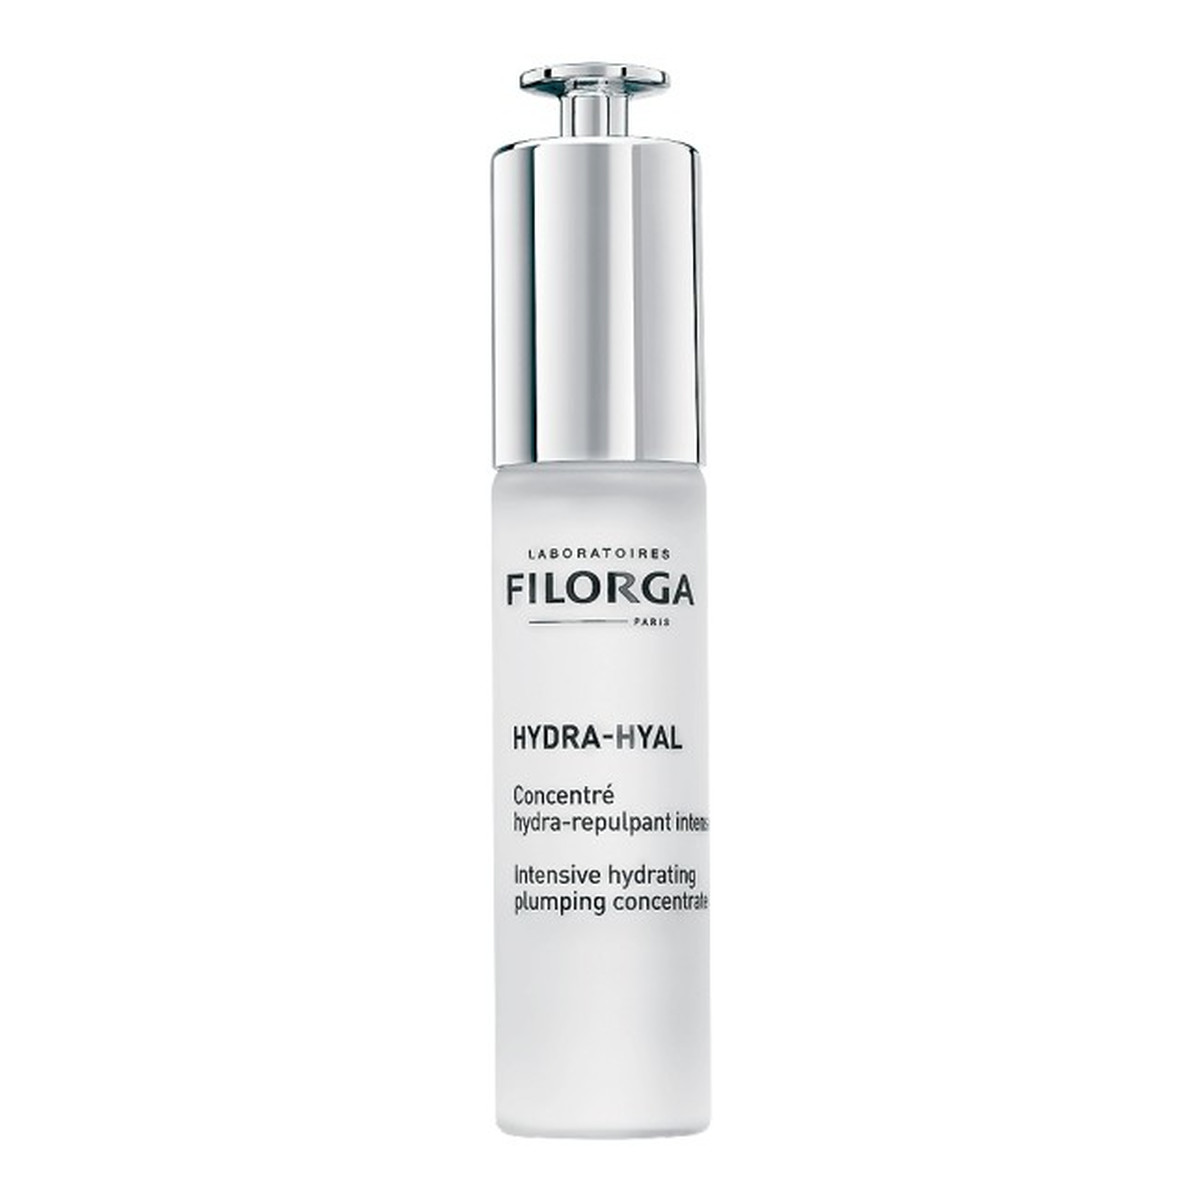 Filorga Hydra-hyal intensive hydrating plumping concentrate intensywnie nawilżające serum do twarzy 30ml